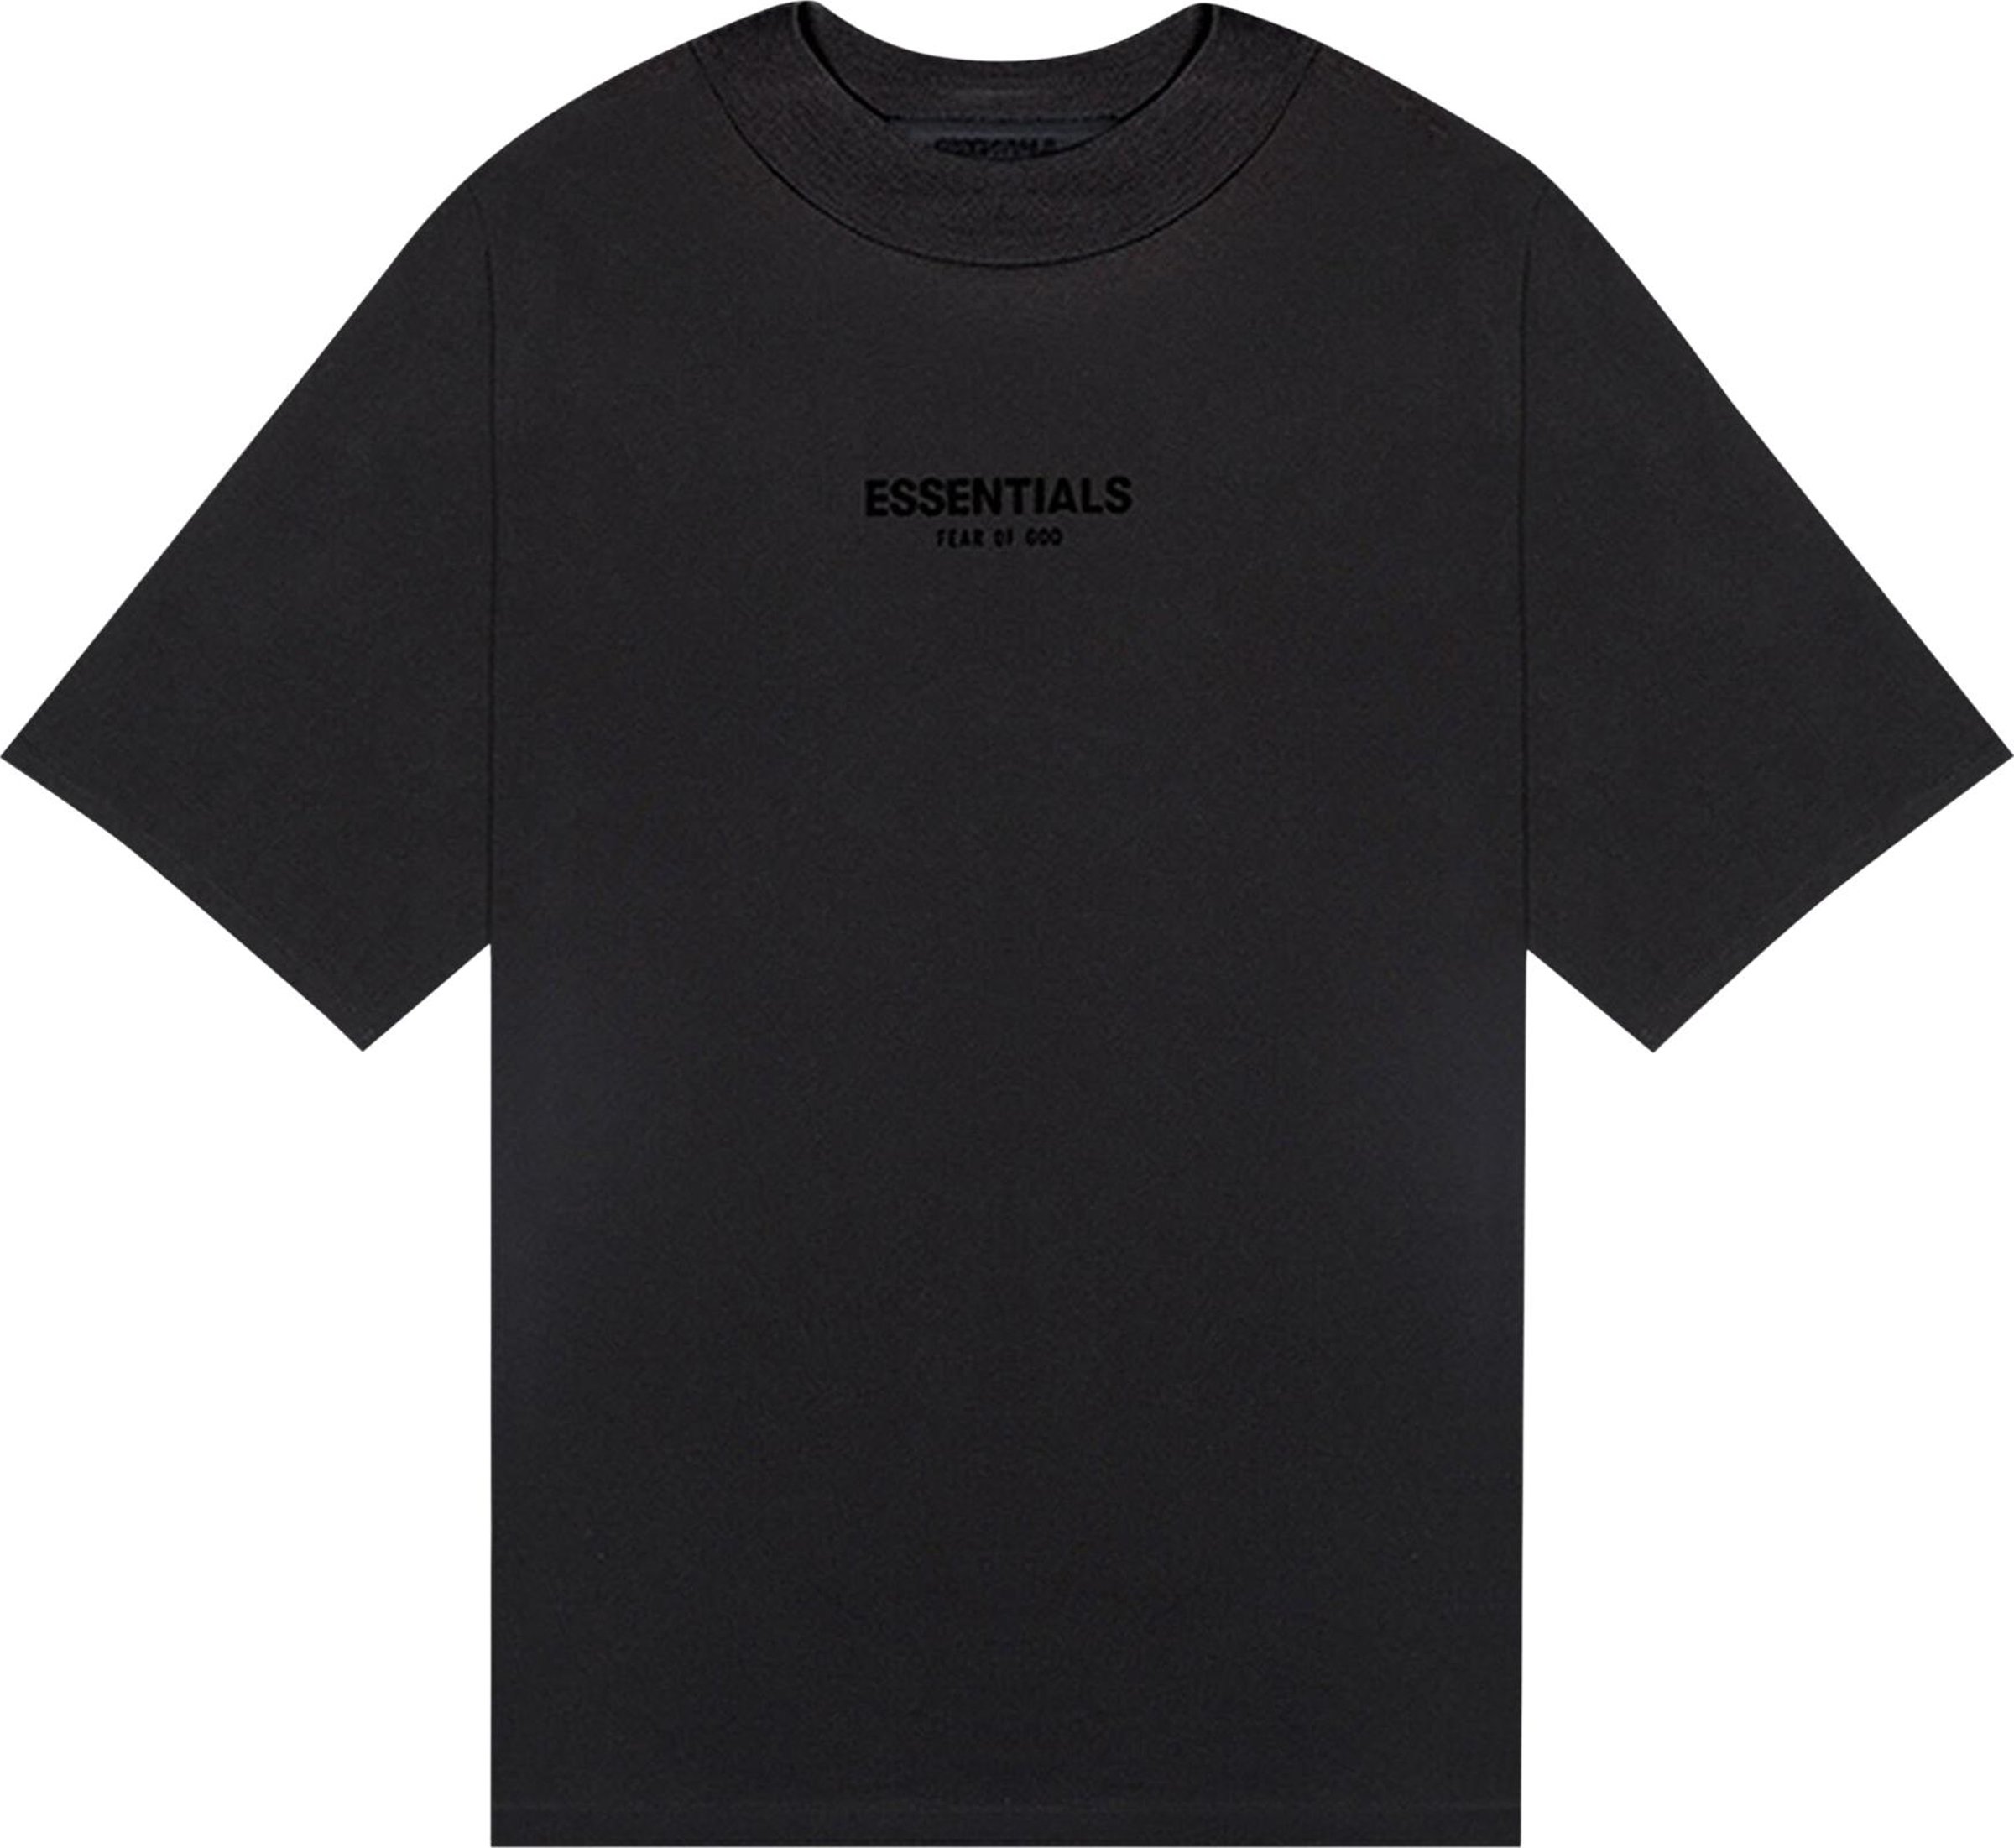 Buy Fear of God Essentials T-Shirt 'Jet Black' - 0125 25050 0135 861 | GOAT